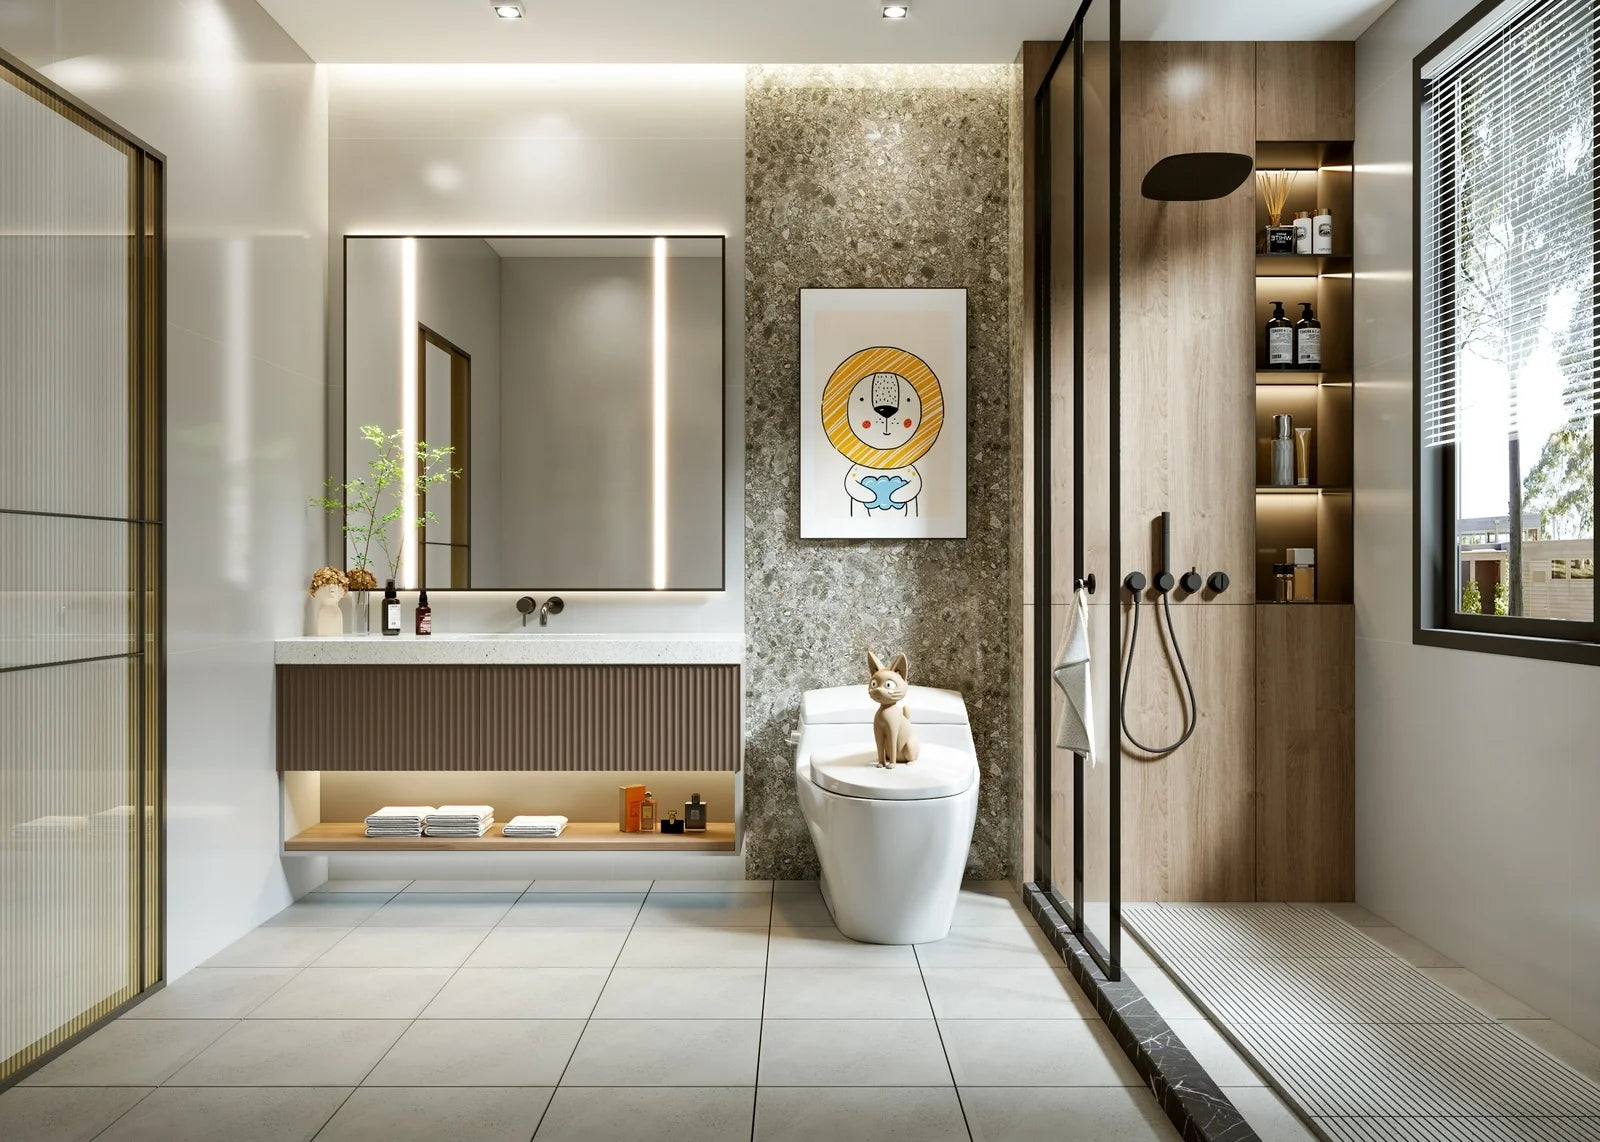 italian toilet furniture modern 60 inch bathroom vanities set with sink drawers and mirror